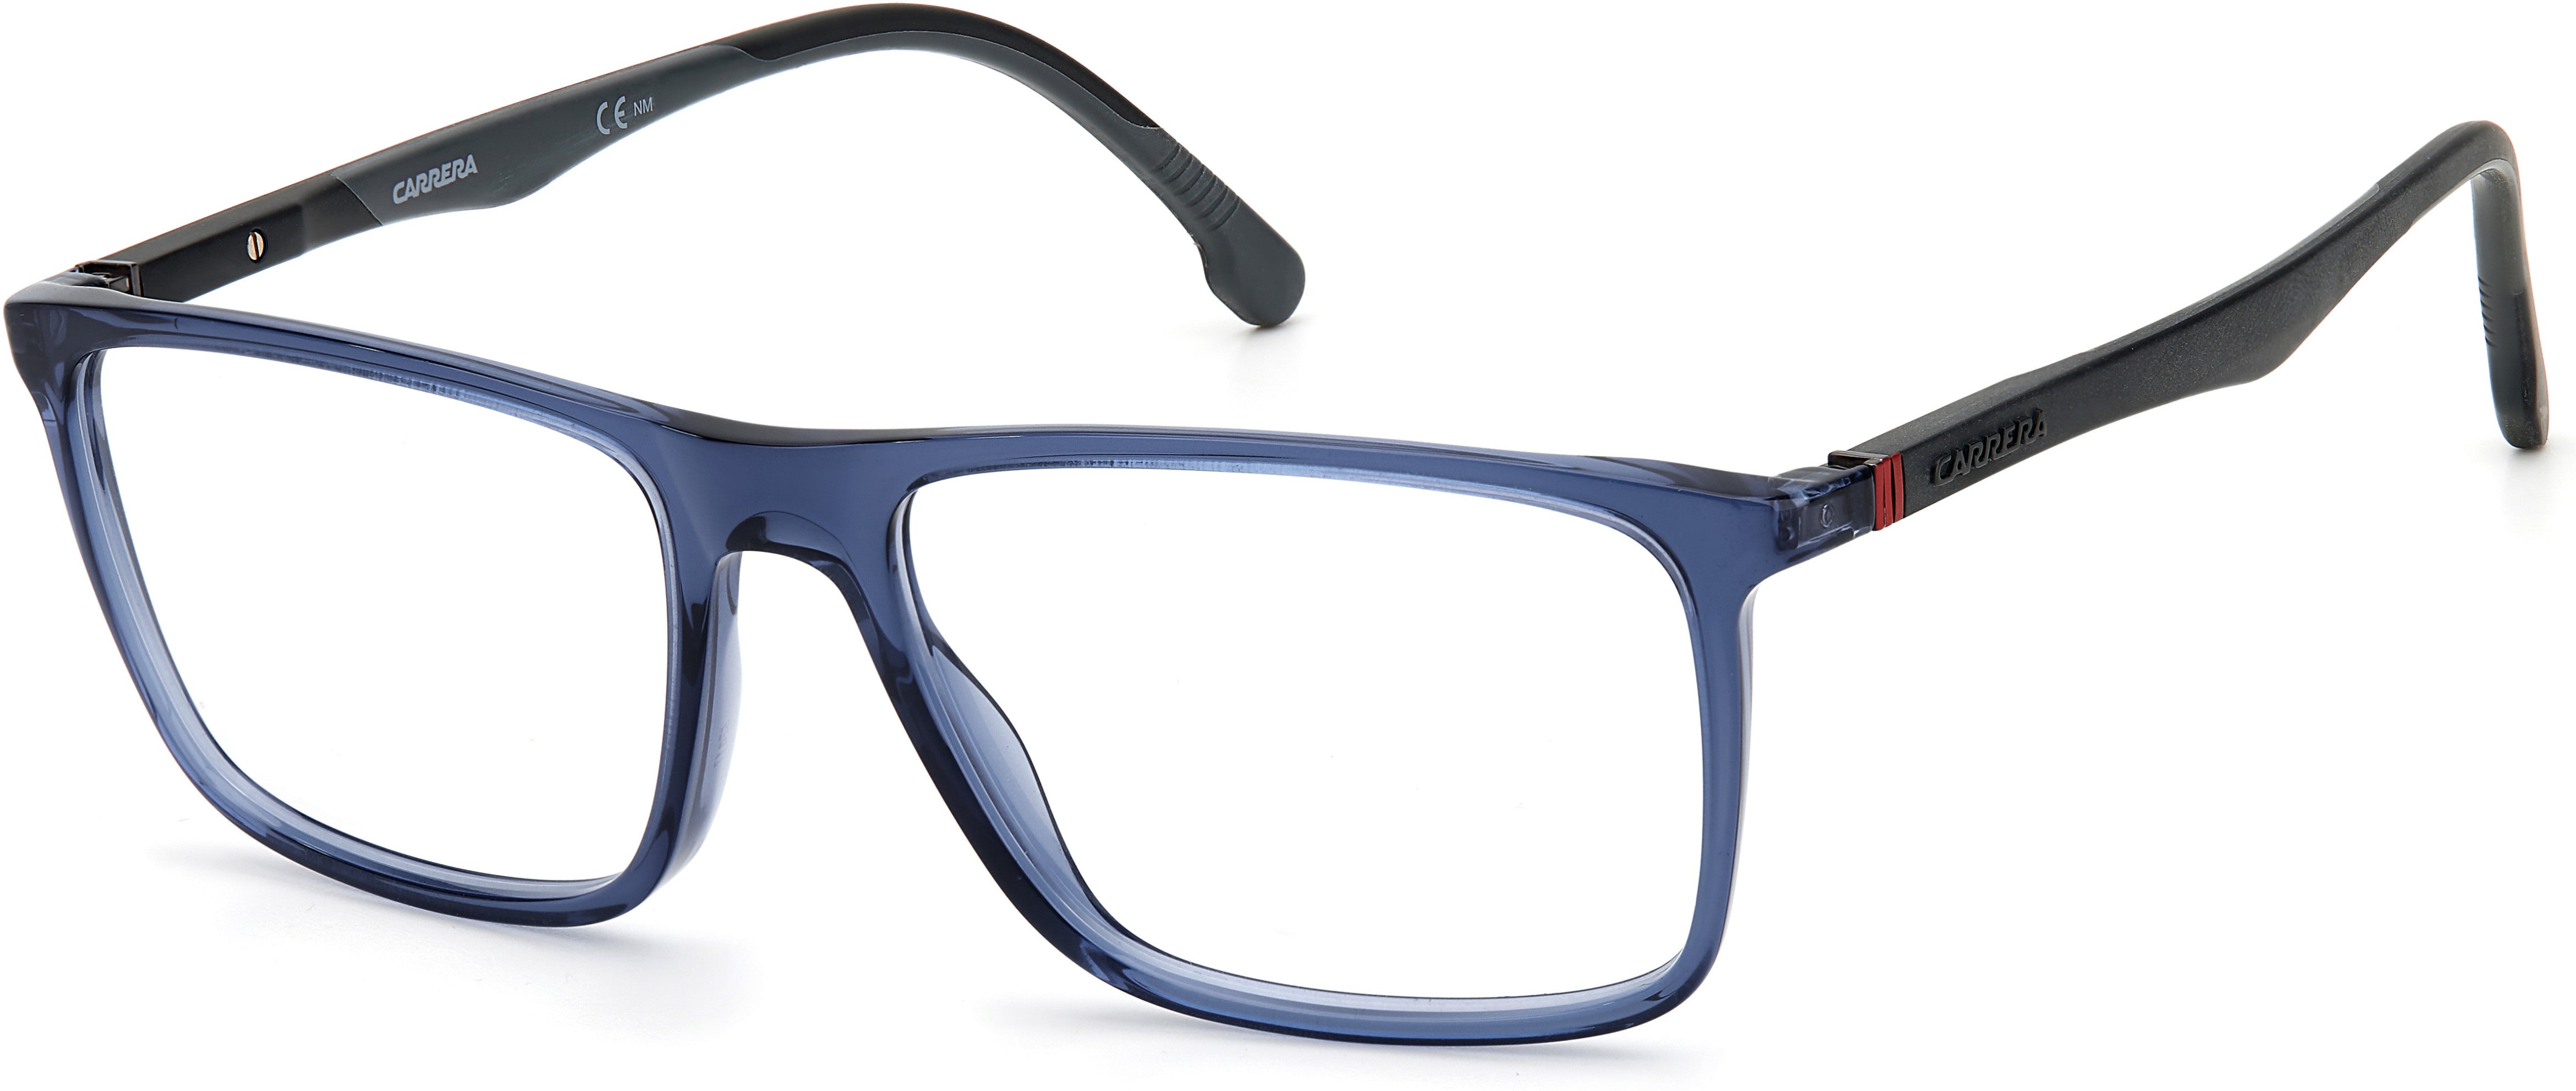  Carrera 8862 Rectangular Eyeglasses 0PJP-0PJP  Blue (00 Demo Lens)